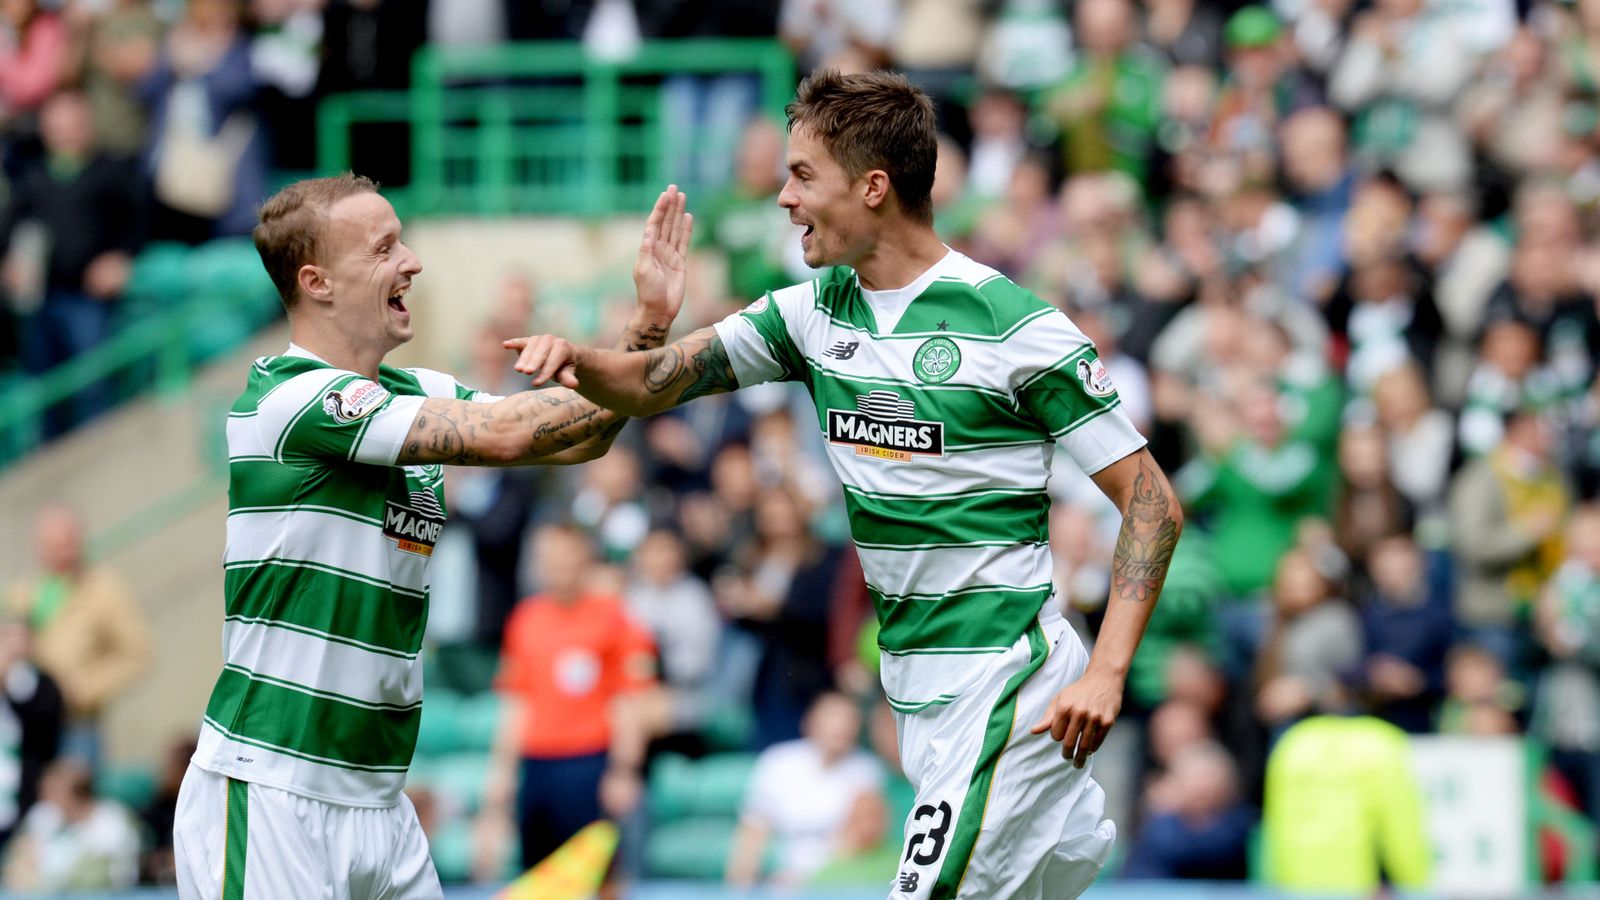 Celtic 4 - 2 Inverness - Match Report & Highlights